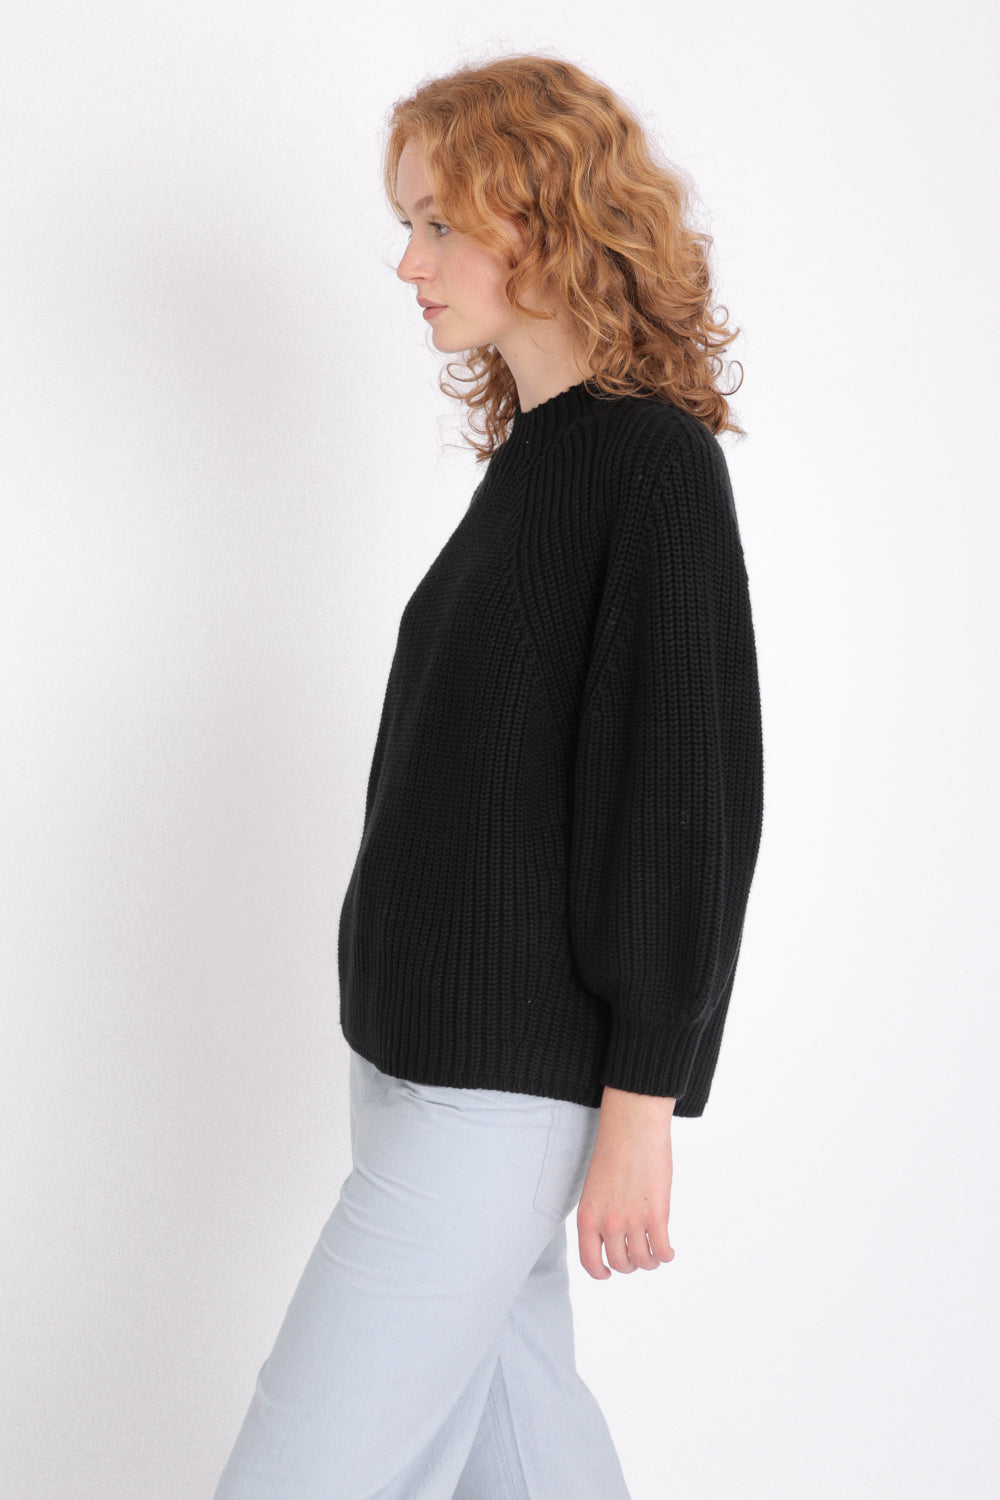 Apiece Apart | Eco Nueva Merel Knit Black Sweater | The Standard Store